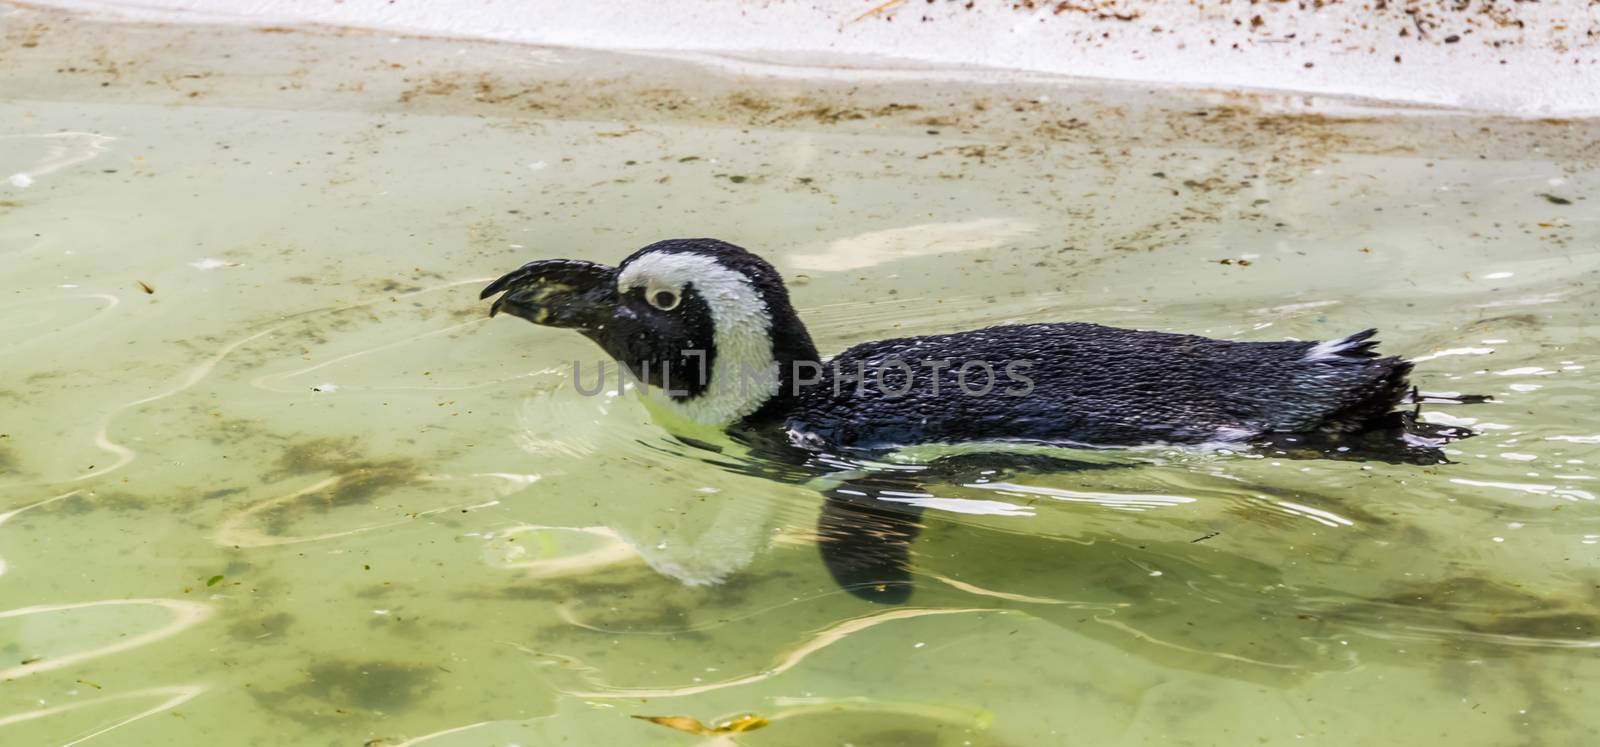 african penguin swimming in the water, flightless bird from Africa, Endangered animal specie by charlottebleijenberg